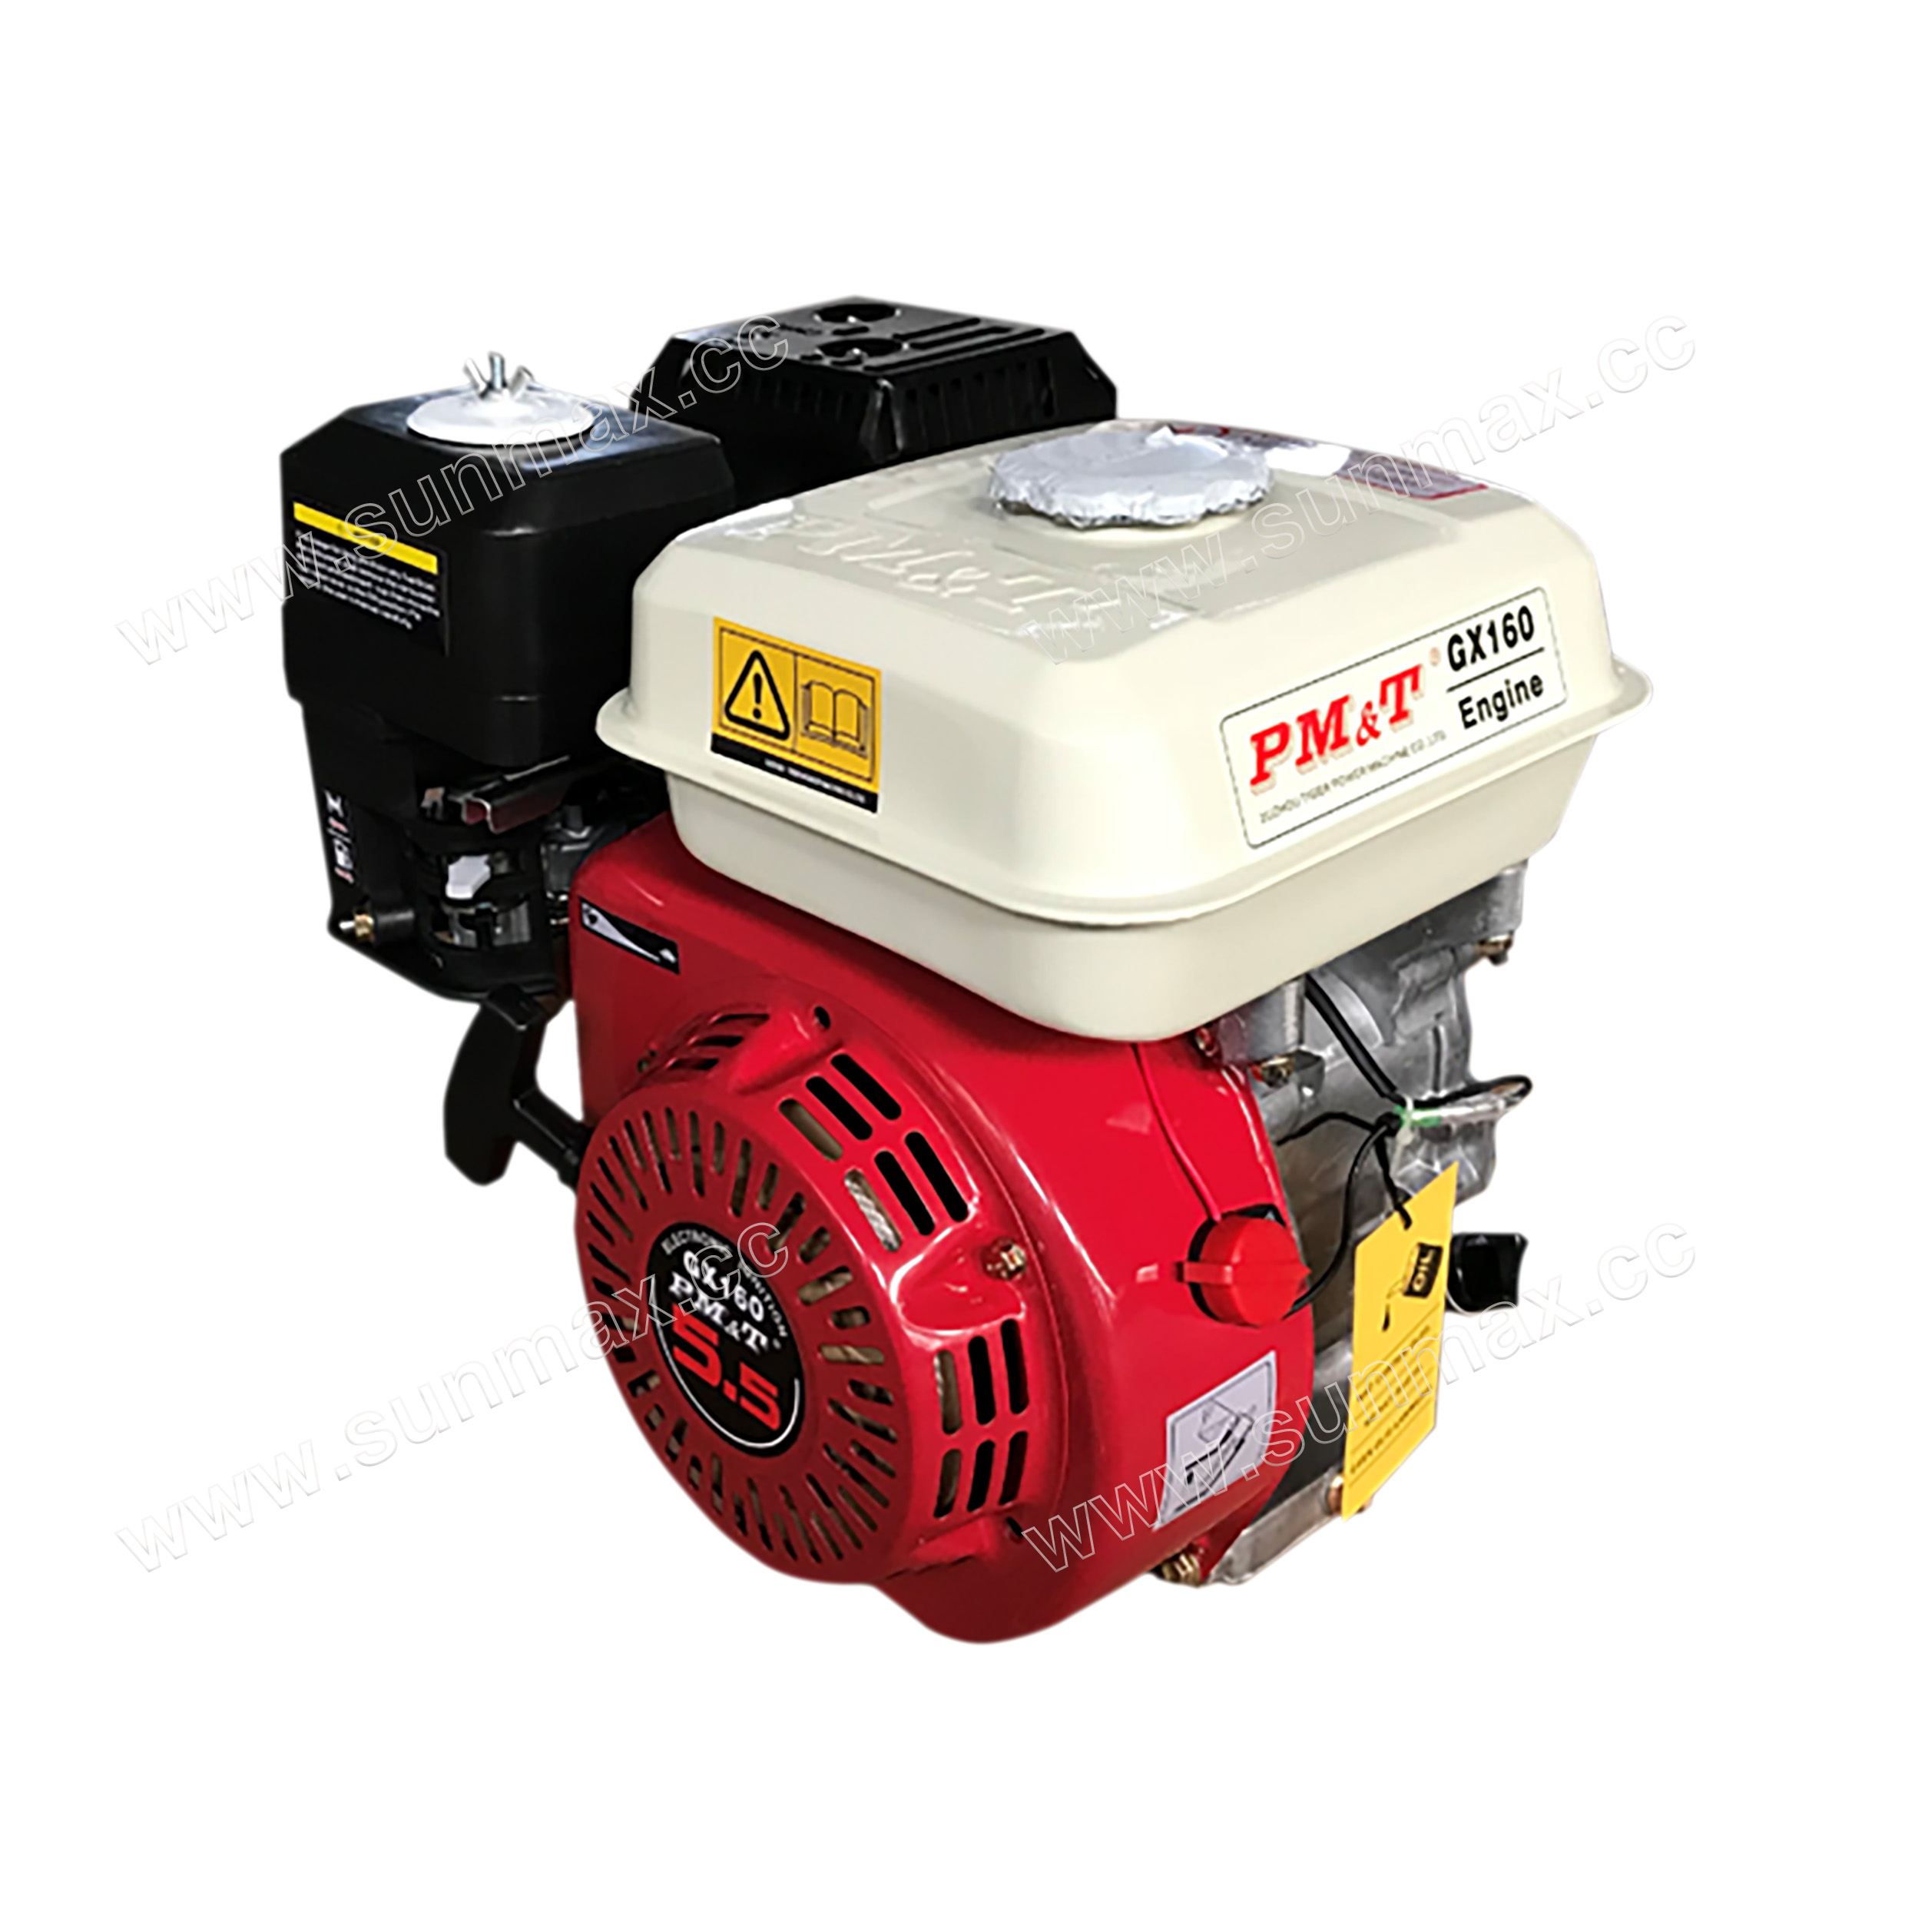 PM&T Multi Purpose Gasoline Engine Gx160 